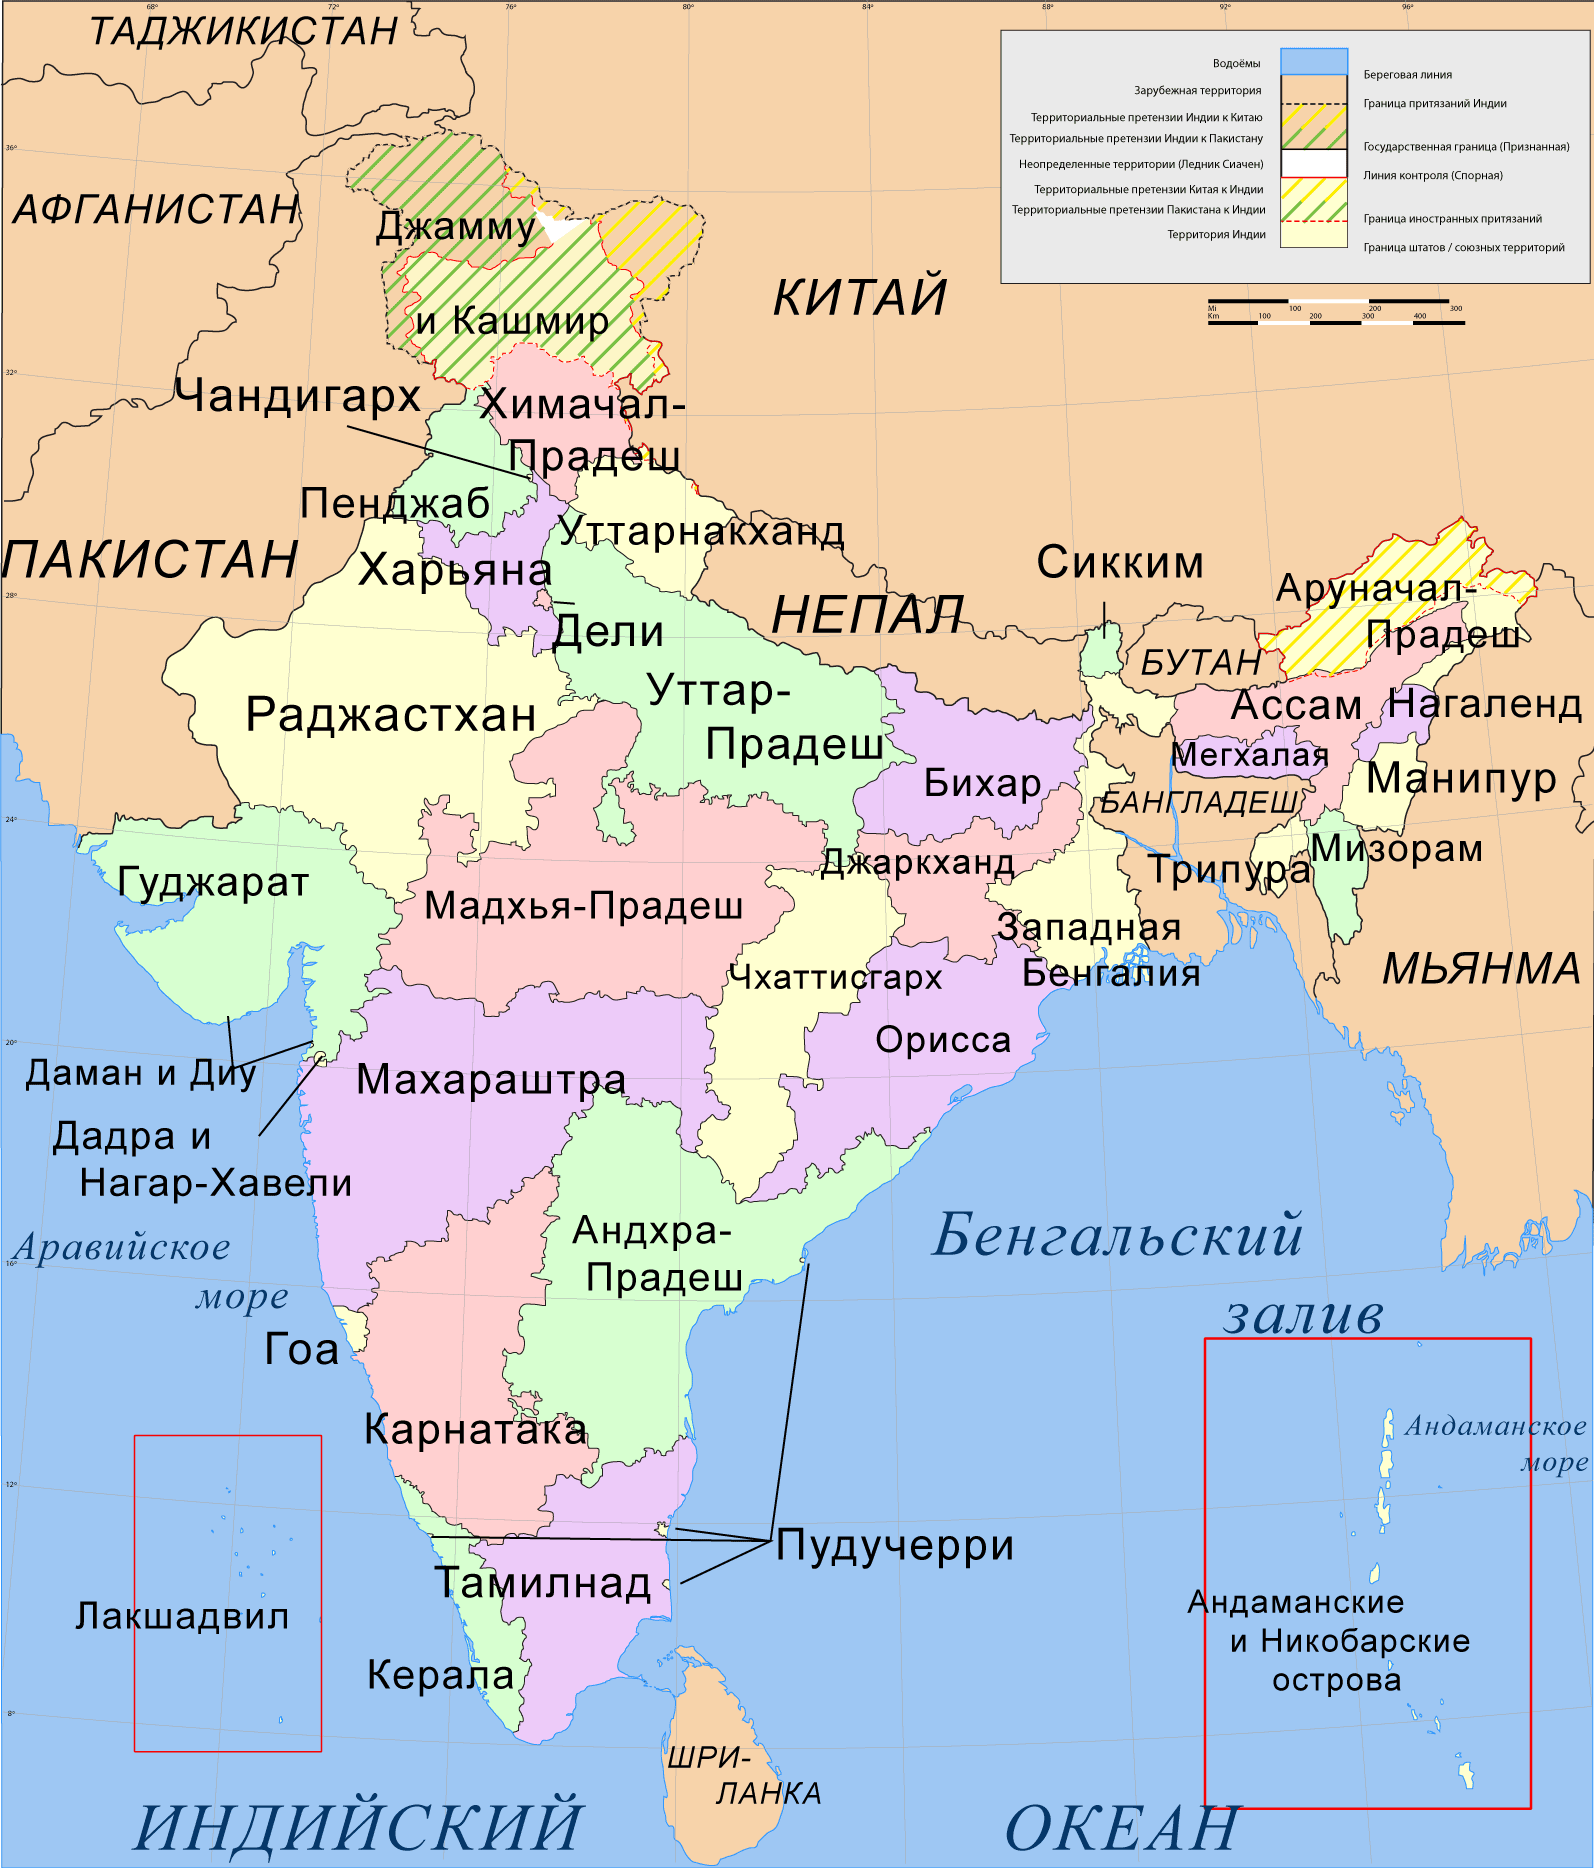 Карта индии реки